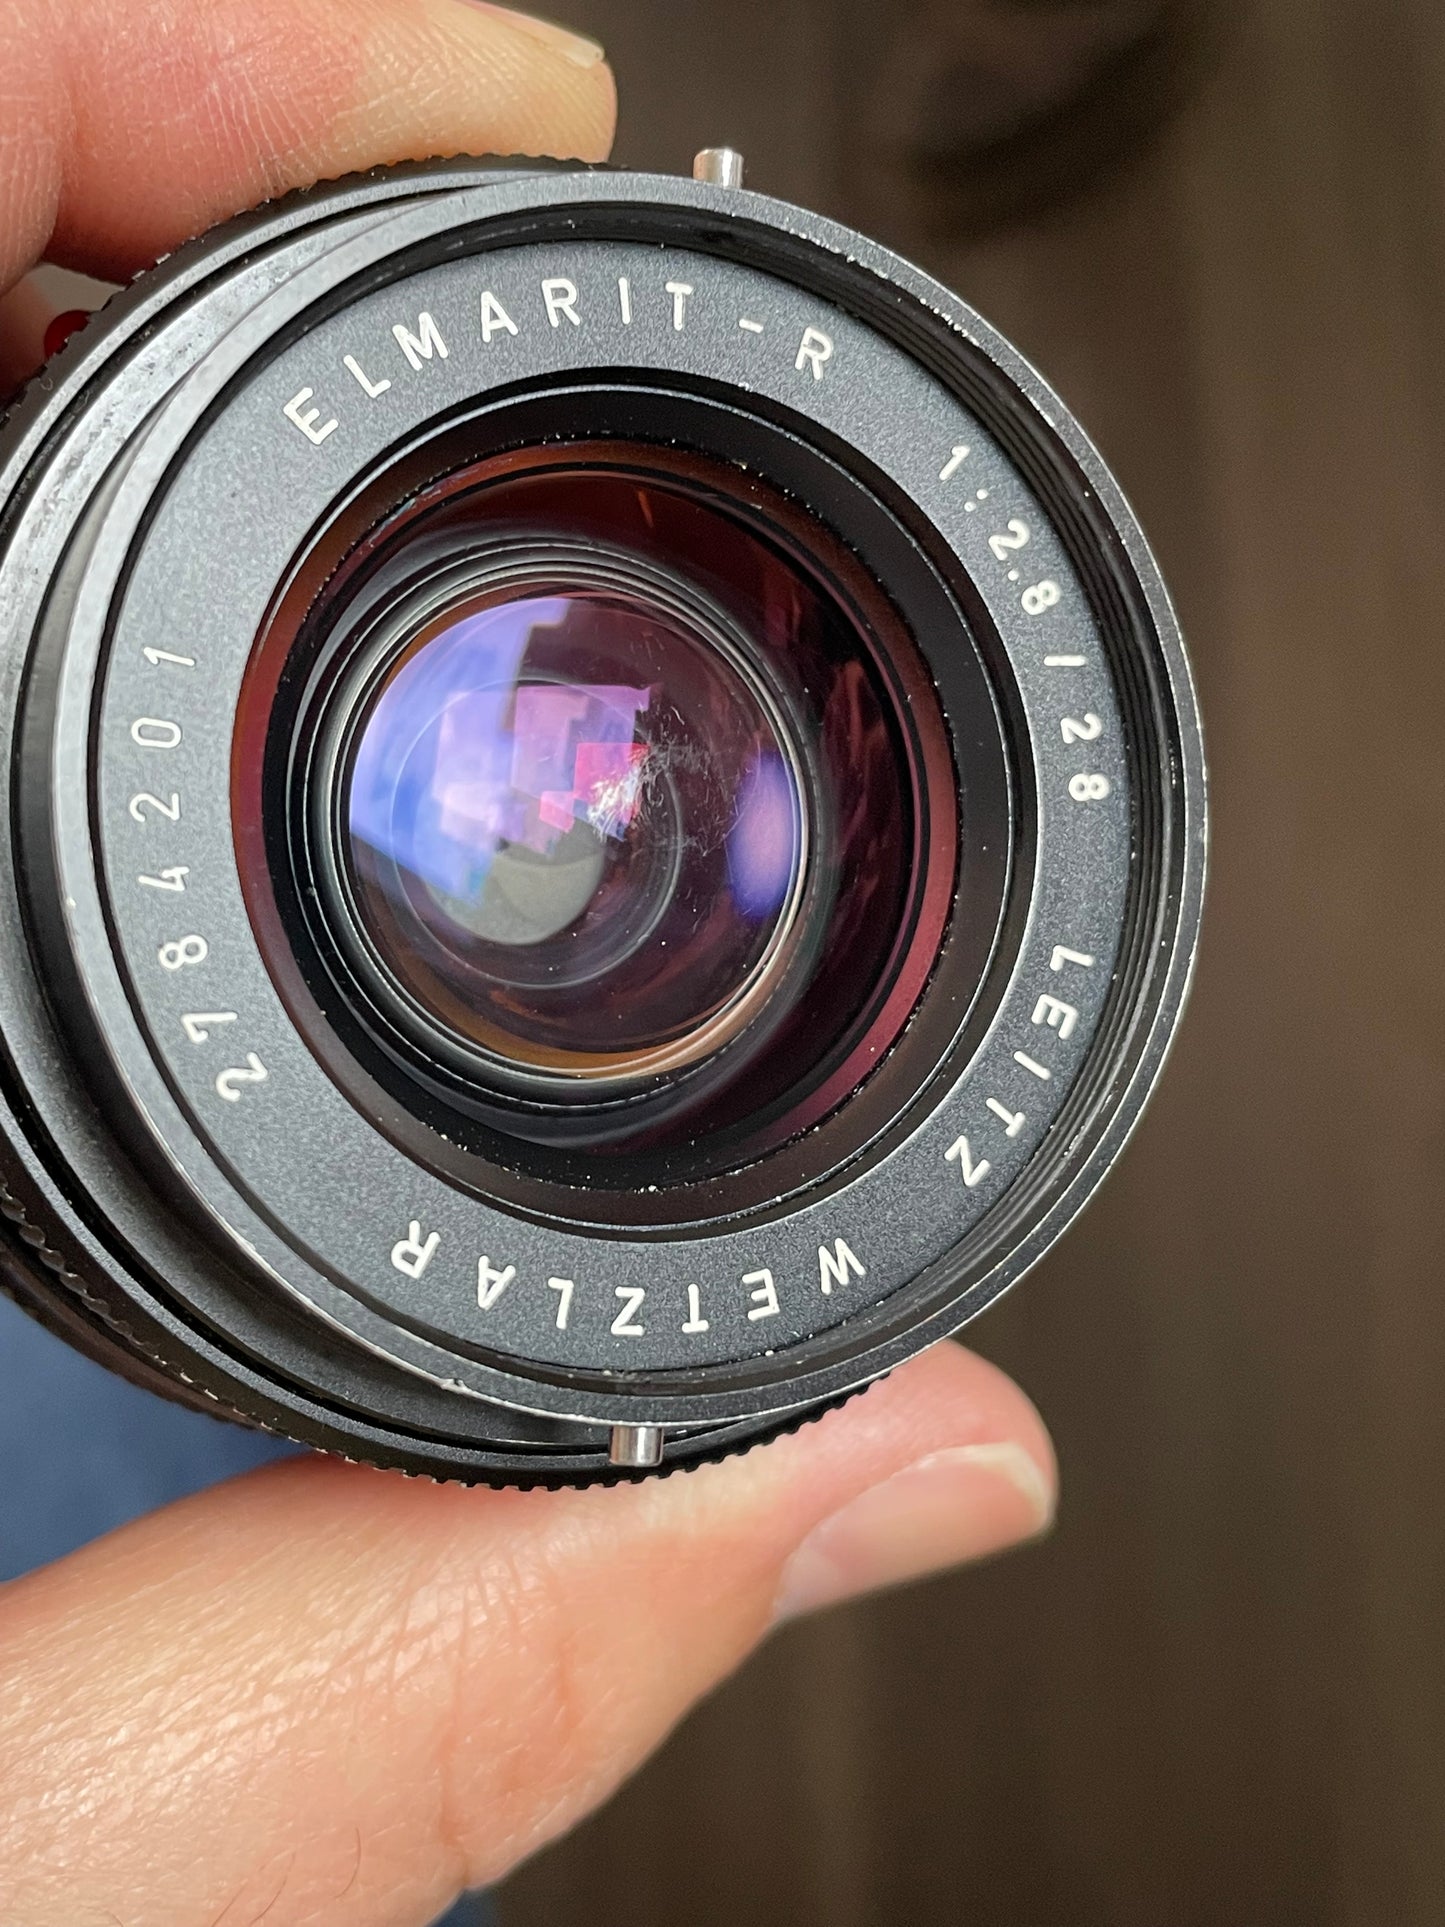 Leica Wetzlar ELMARIT-R 28mm F2.8 3 Cam R Mount Lens